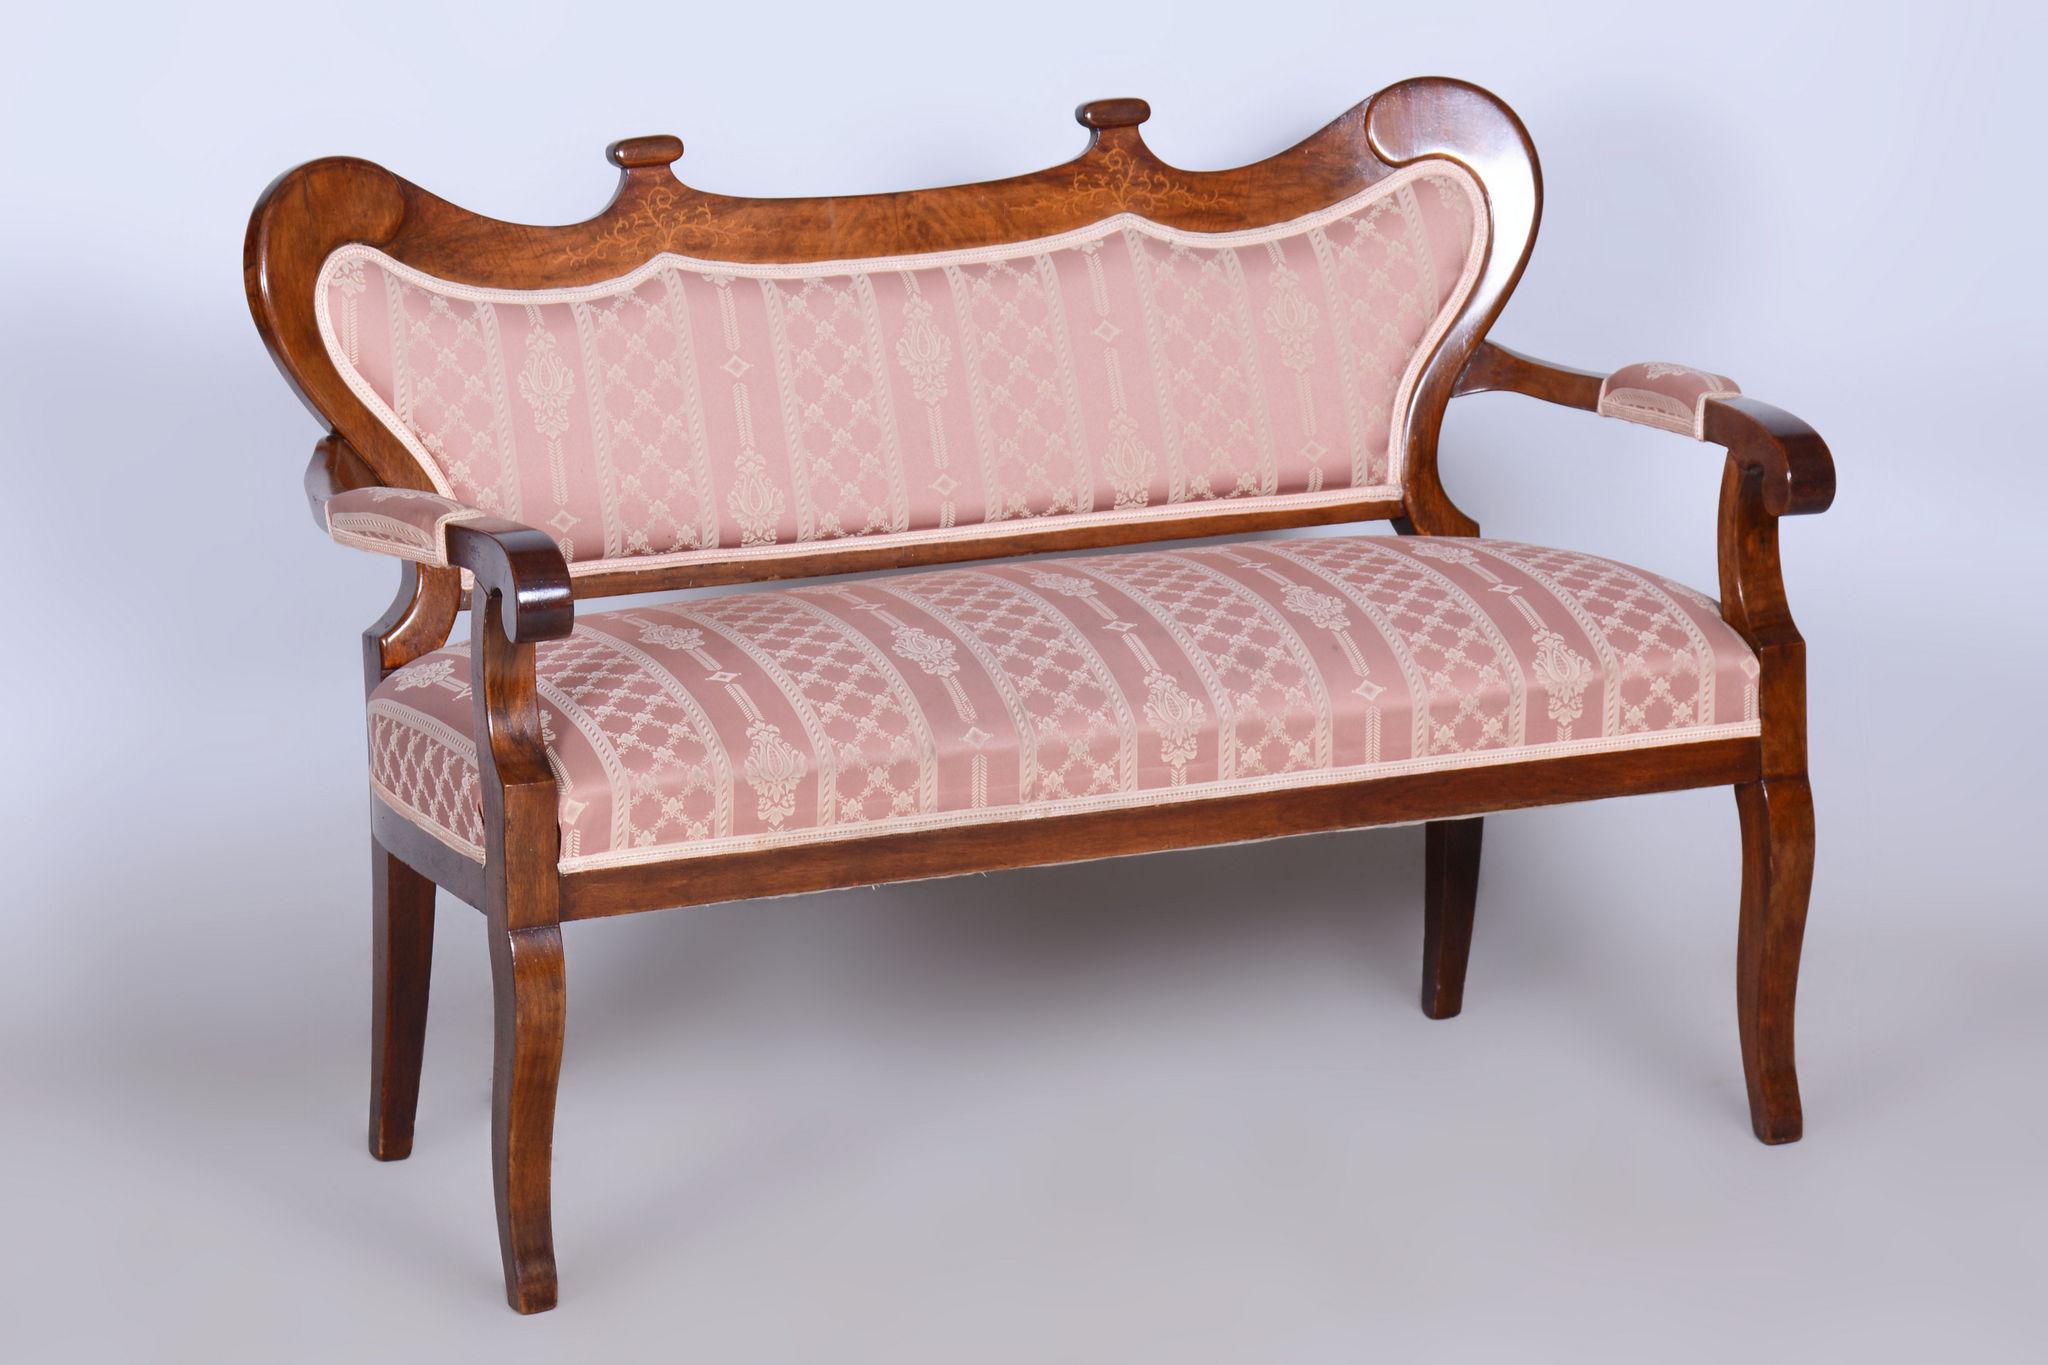 Restored Biedermeier Seating Set, Oak Walnut, Stable Constructon, Austria, 1840s For Sale 11